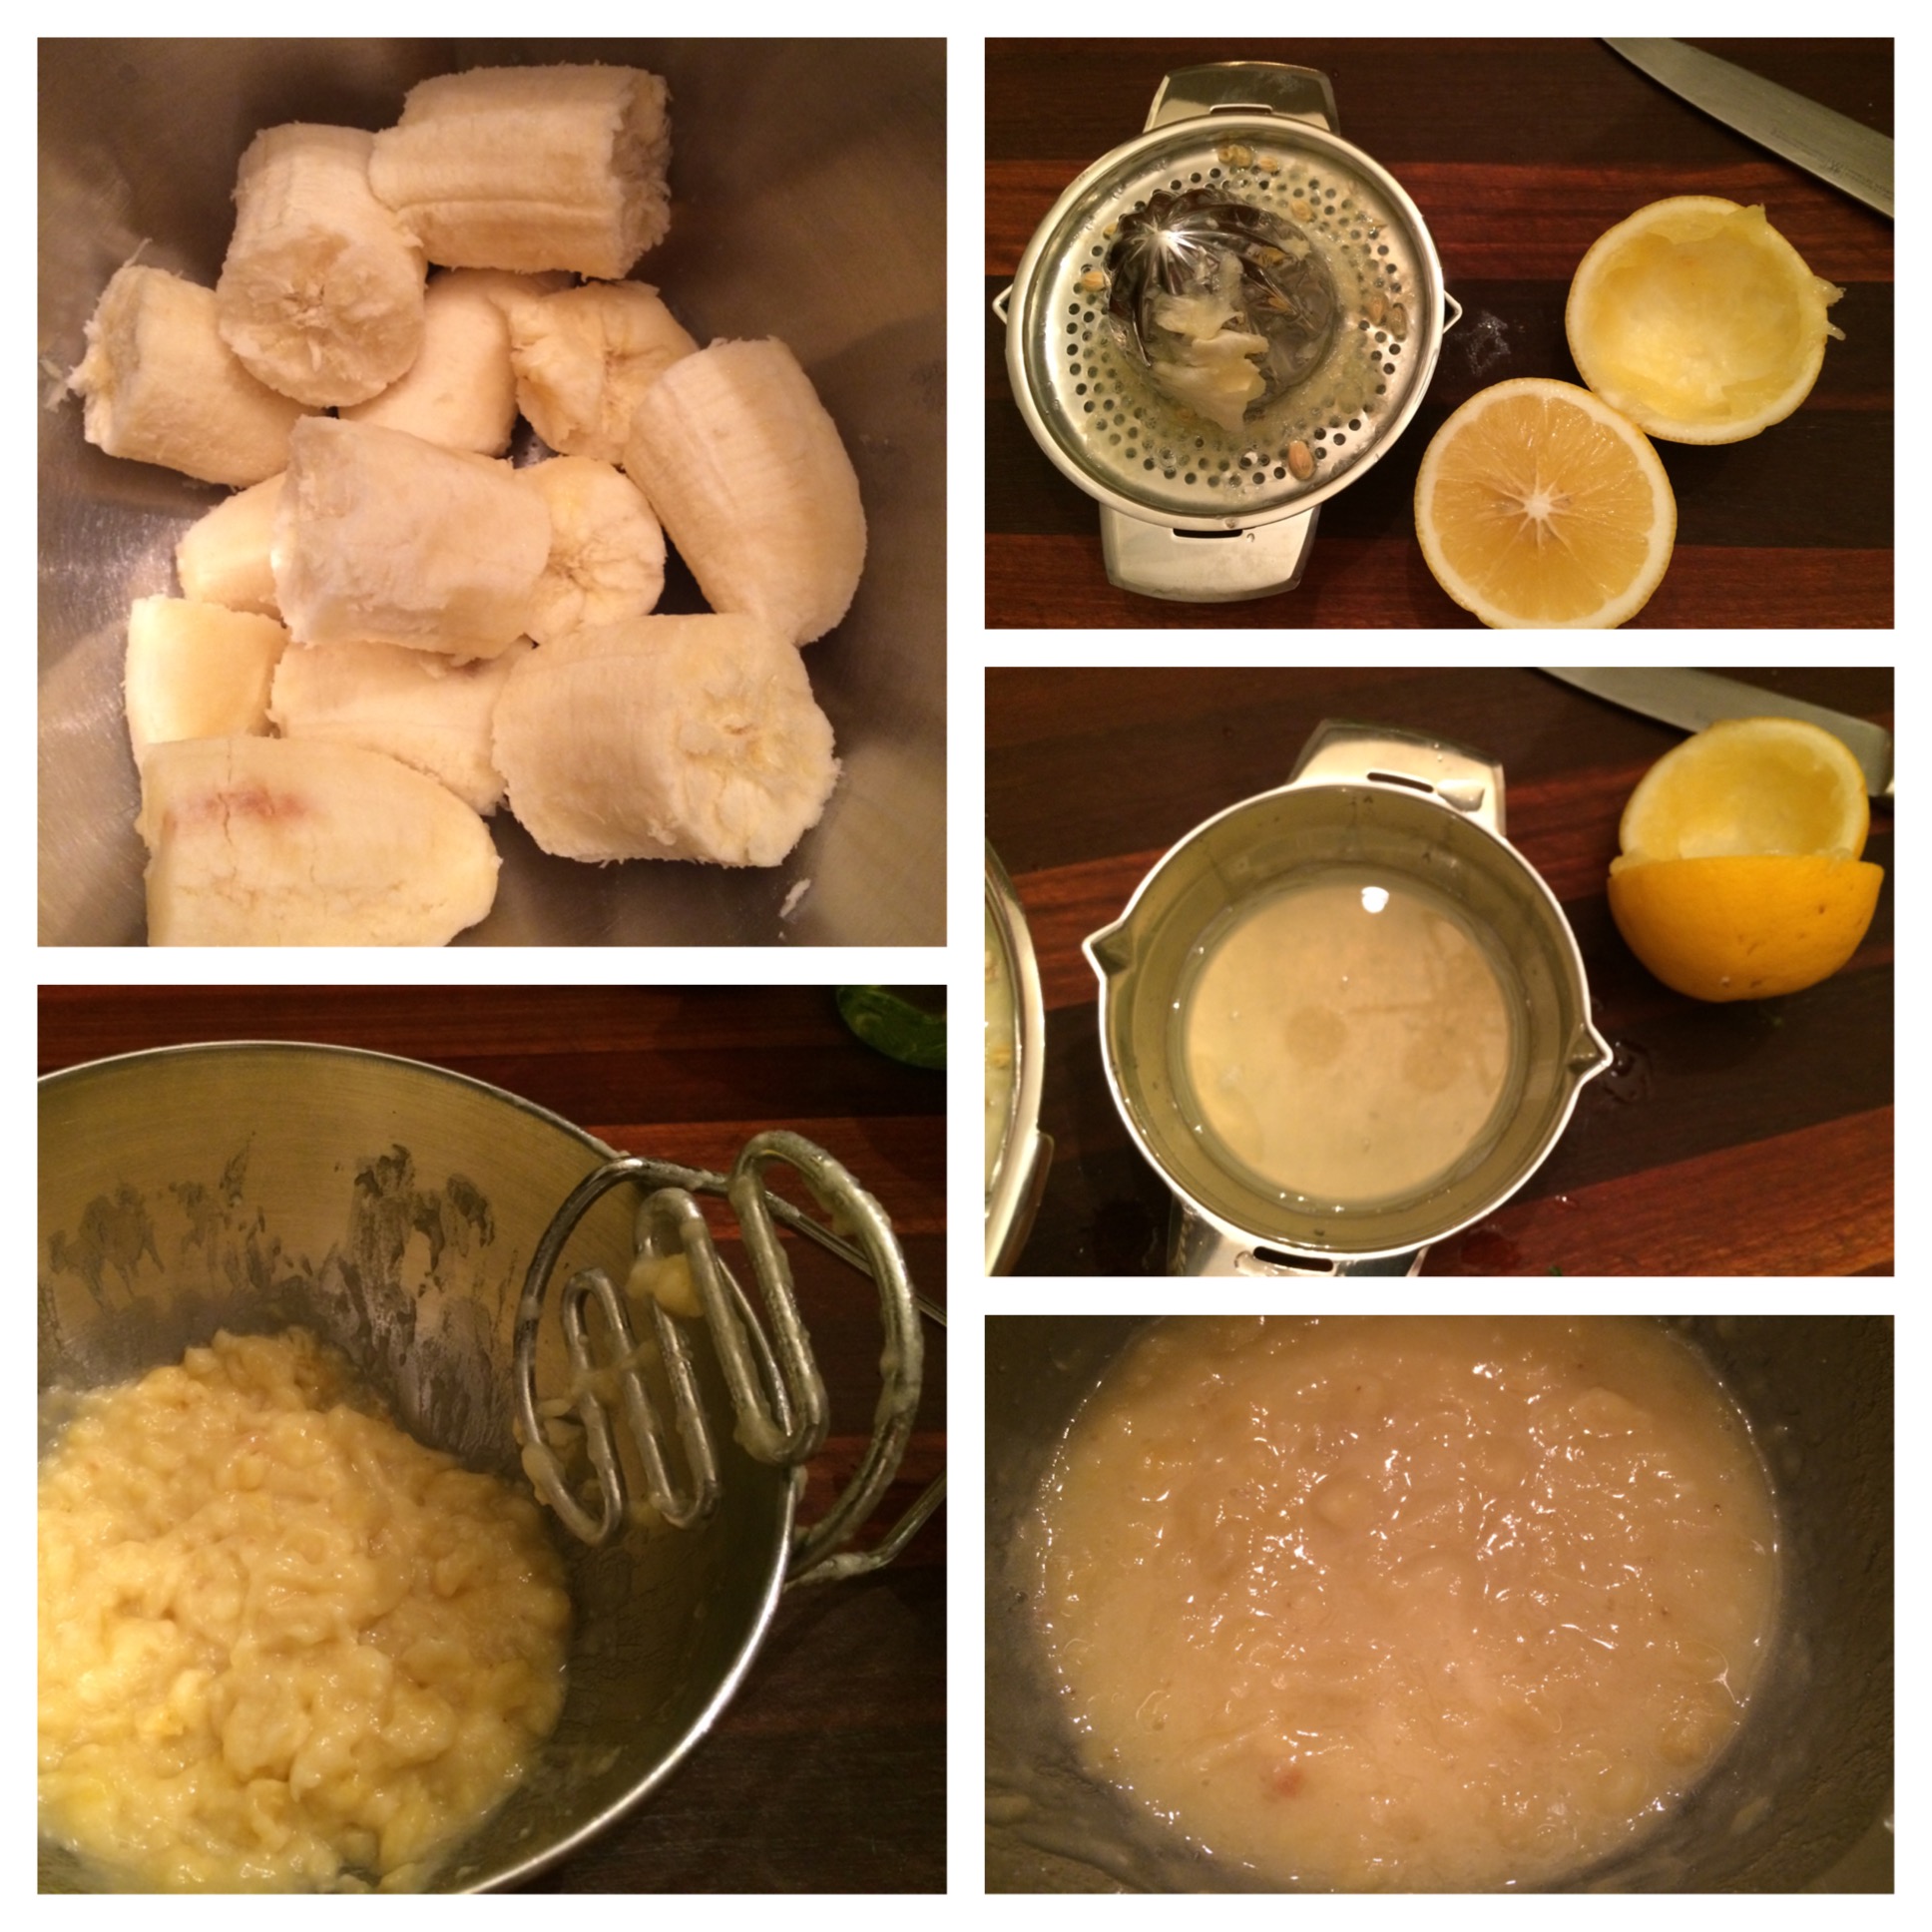 The mashed bananas and lemon juice mixture